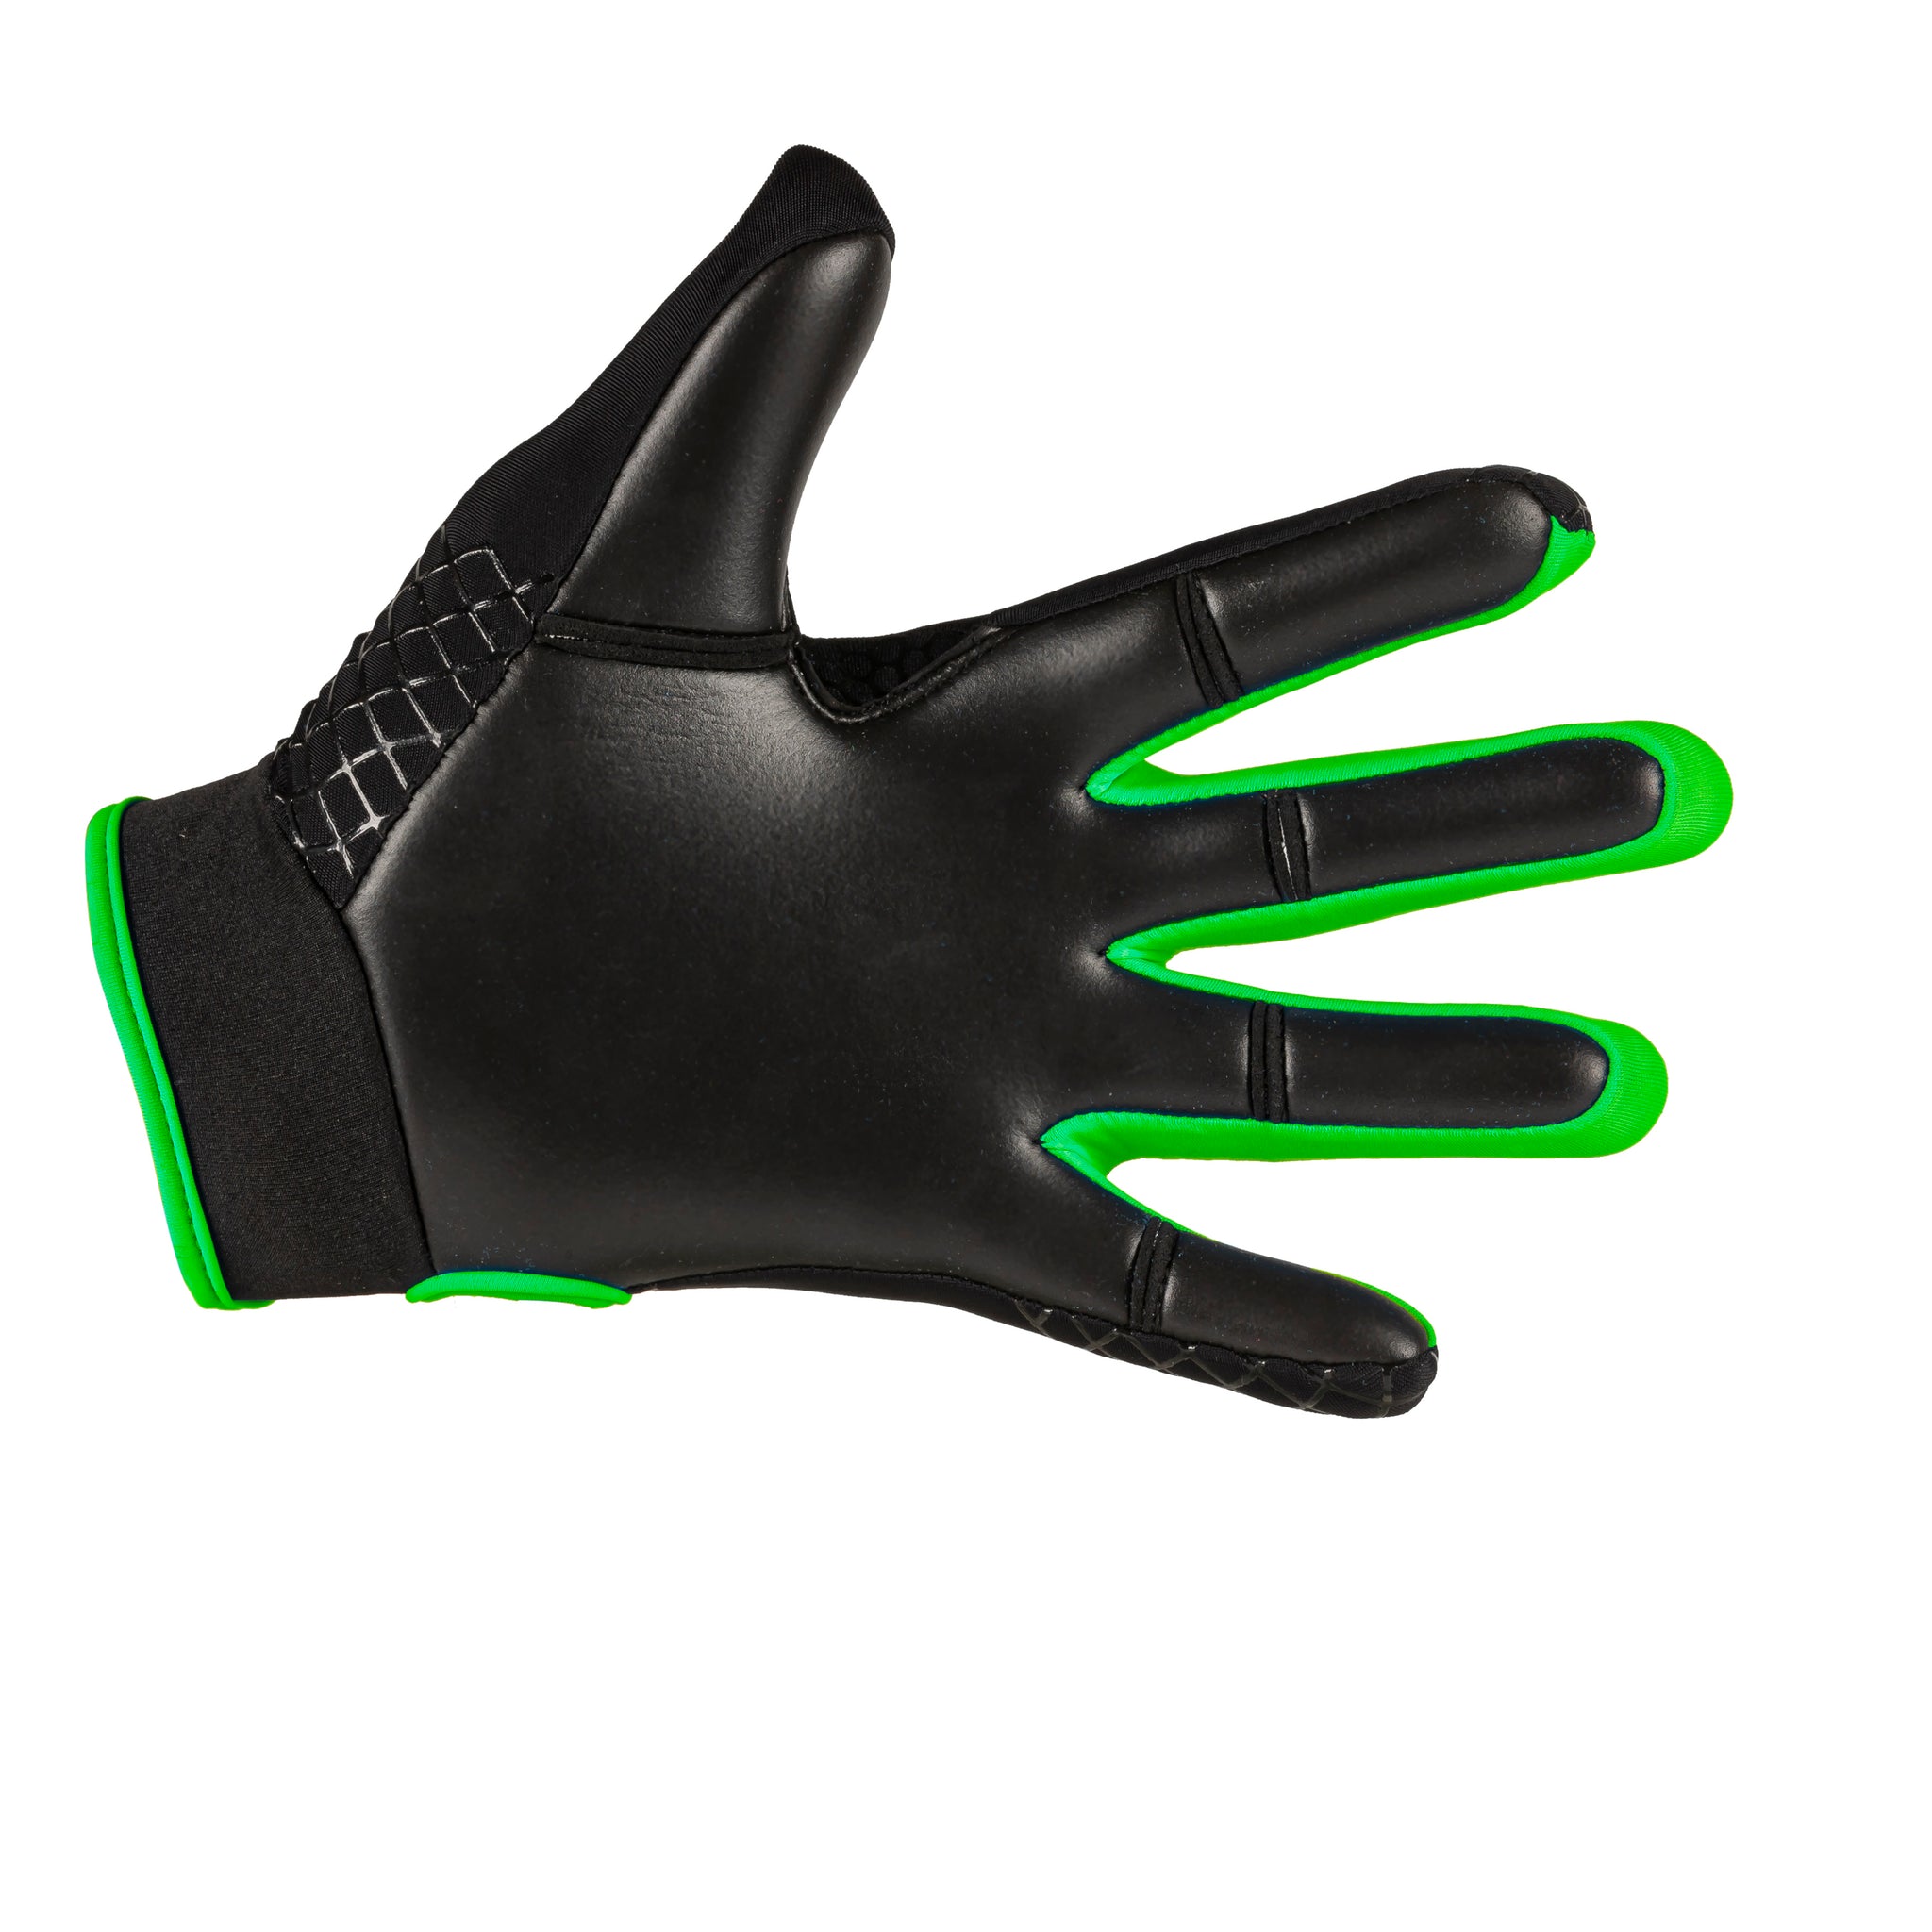 Karakal Web Gaelic Glove Black Green